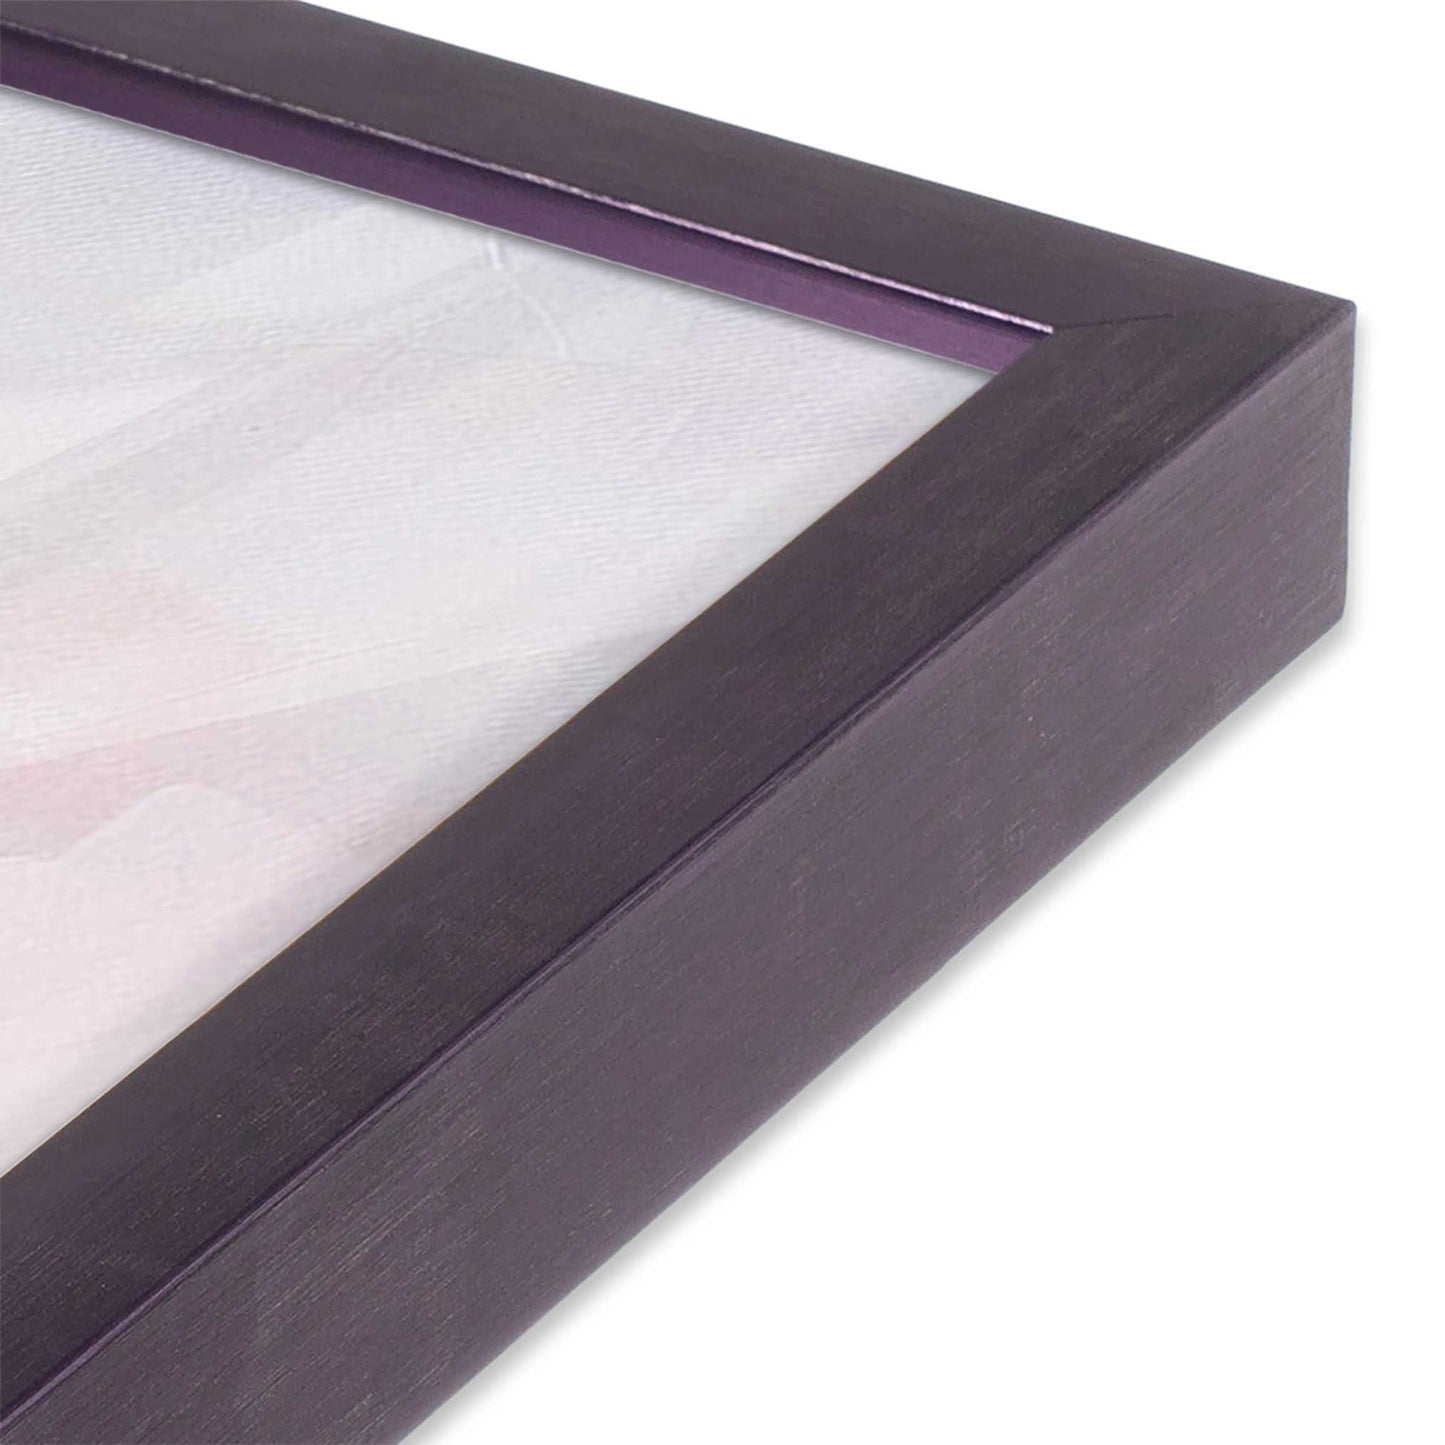 [Color:Purple Iris] Picture of art in a Purple Iris frame of the corner